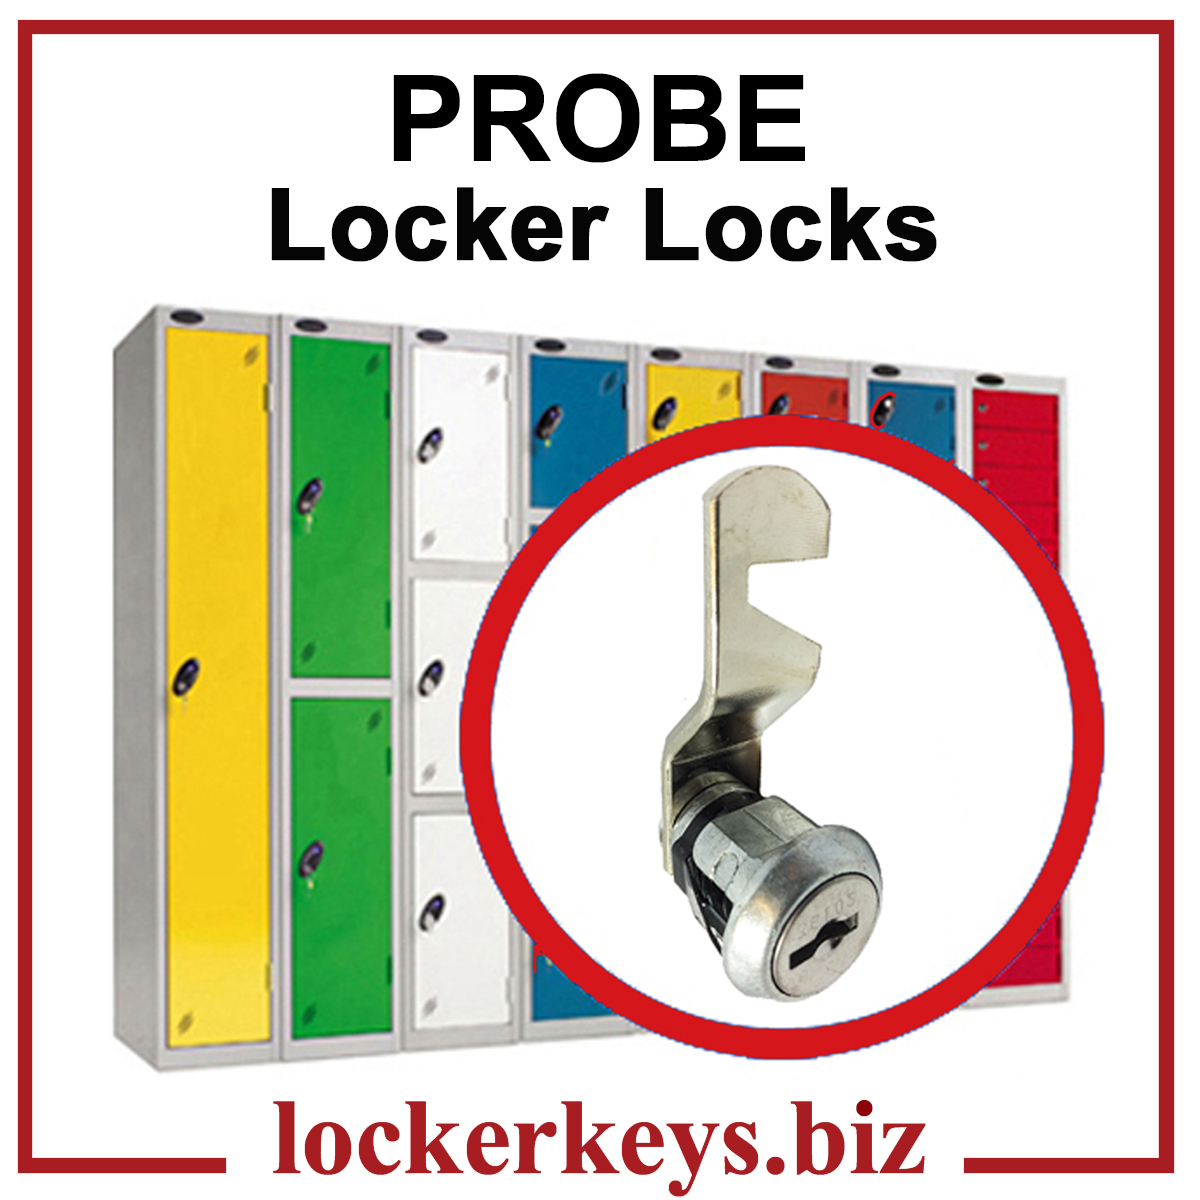 Probe Locker Locks mastered under M36